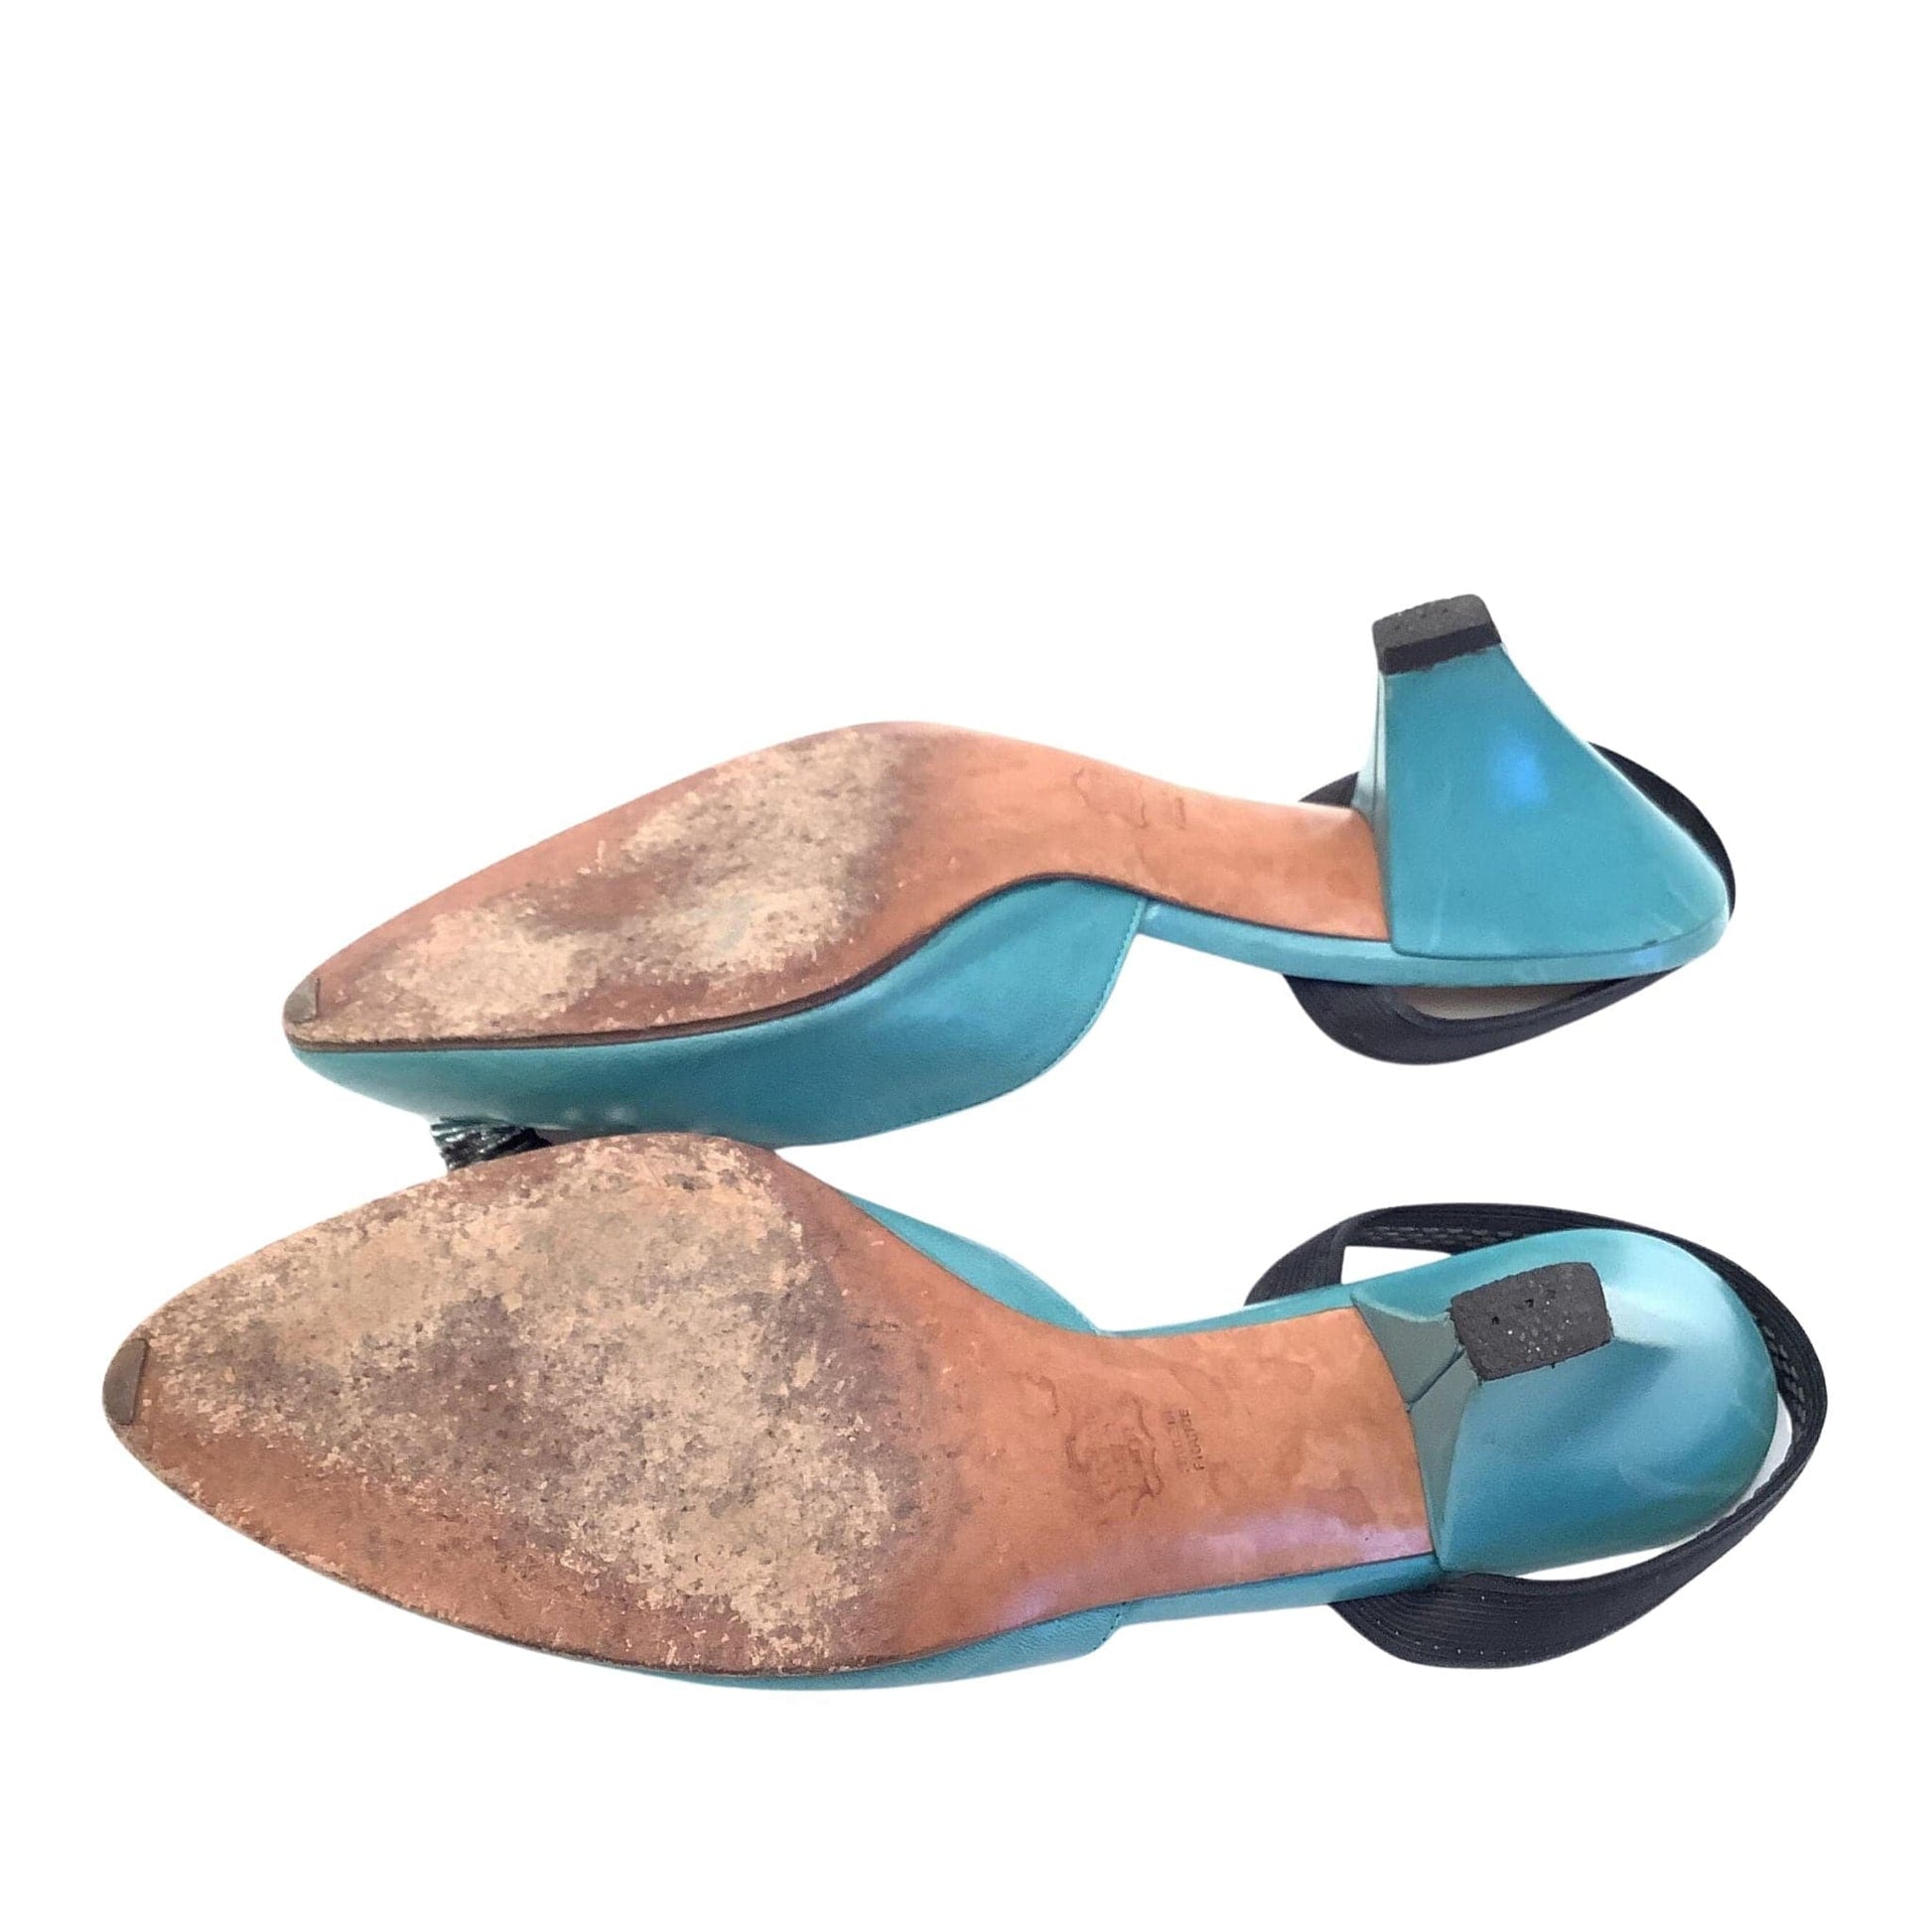 Vintage French Blue Heels 7.5 / Teal / Vintage 1980s